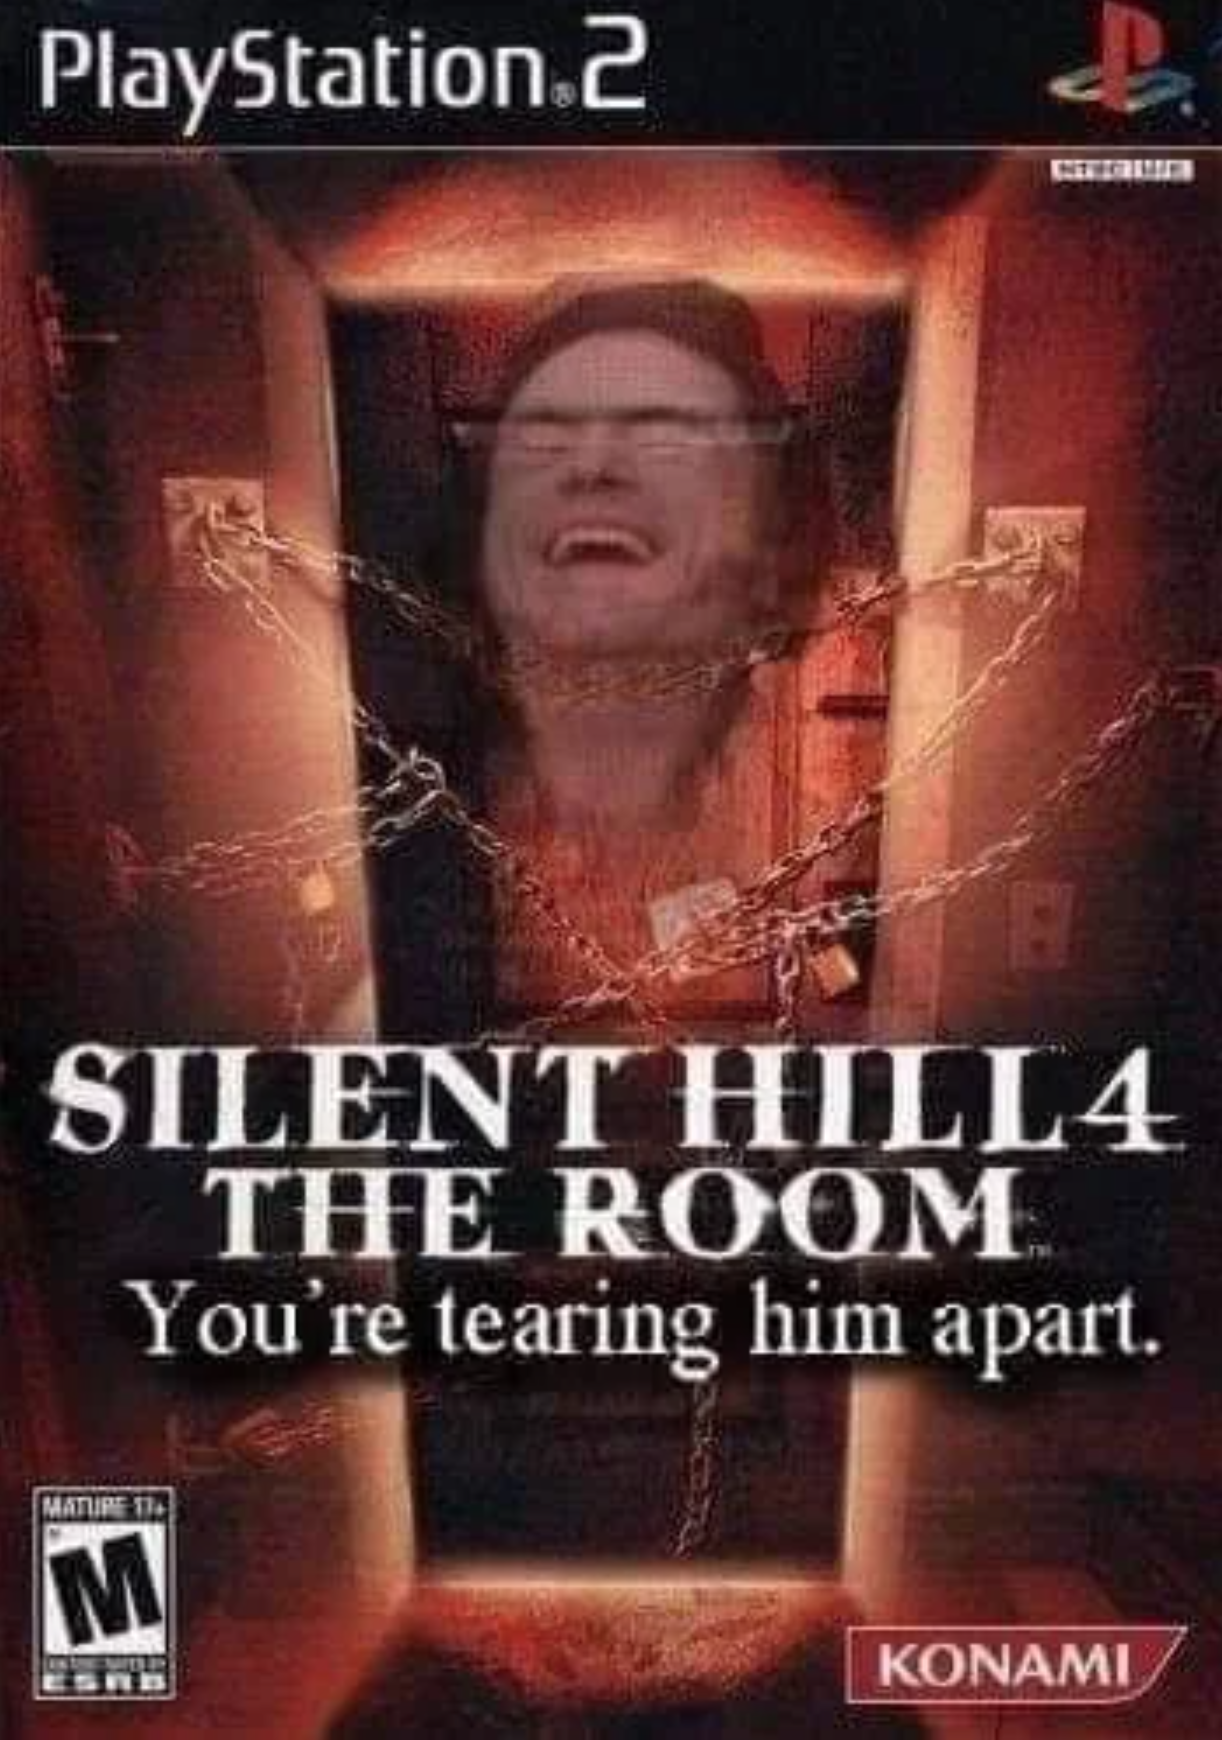 funny gaming memes - silent hill the room ps2 - PlayStation 2 Melor Silent HILL4 The Room. You're tearing him apart. Mat M Konami